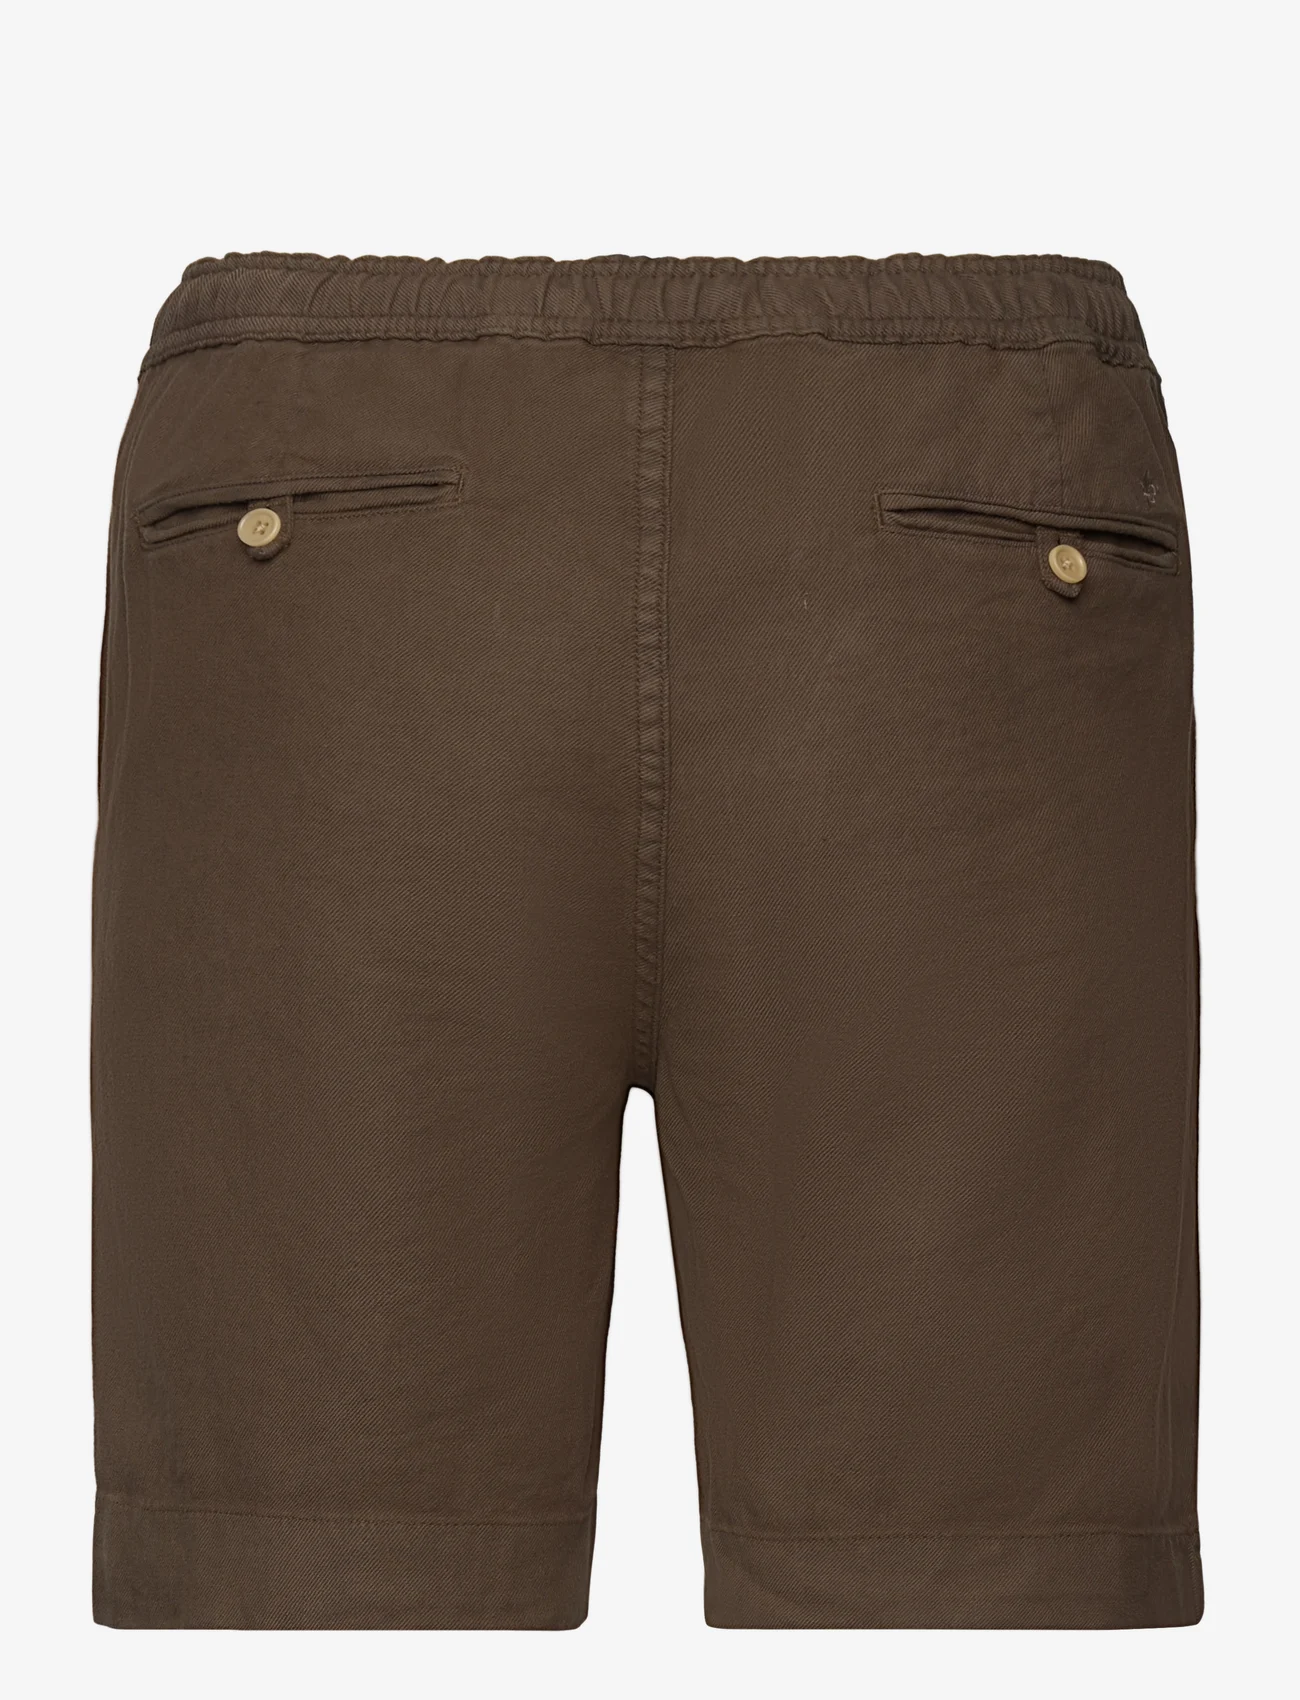 Morris - Winward Linen  Shorts - chino-shortsit - brown - 1